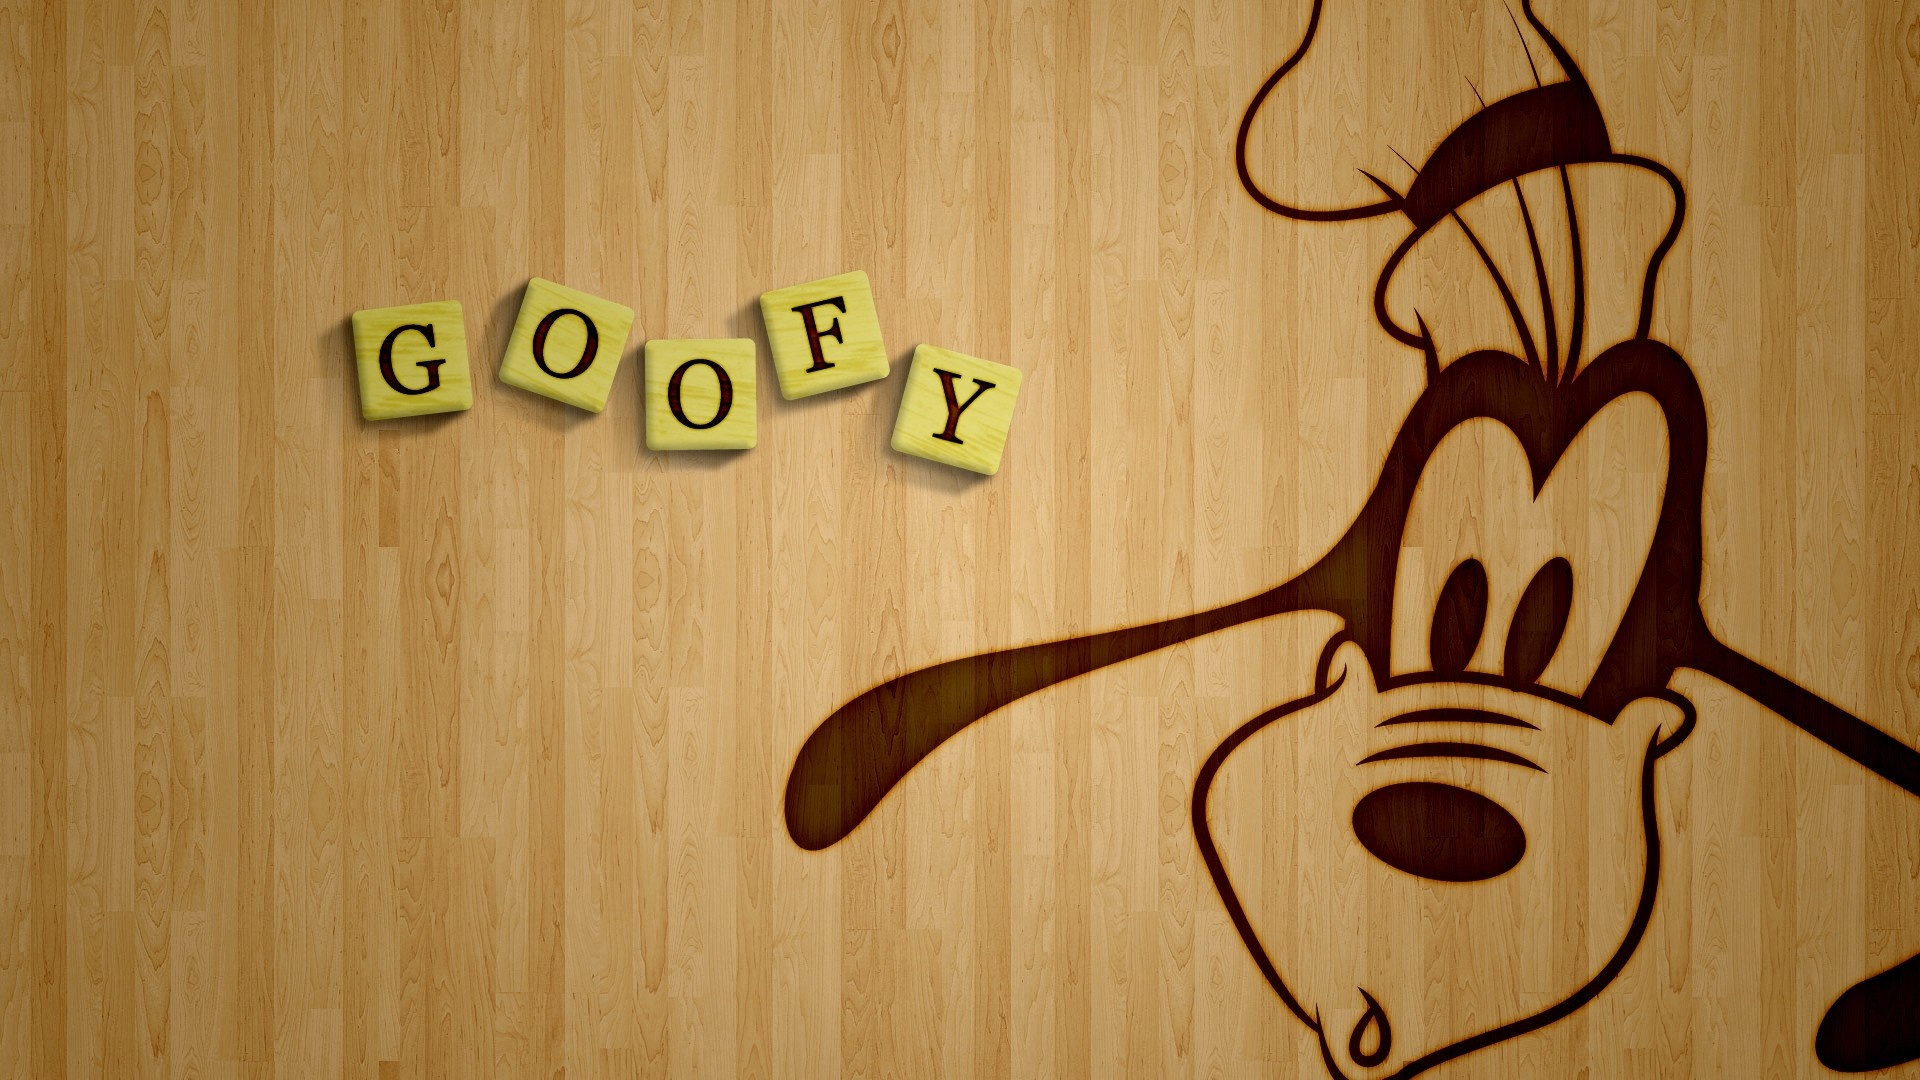 Goofy, Fun-loving, Classic cartoon character, Silly antics, 1920x1080 Full HD Desktop